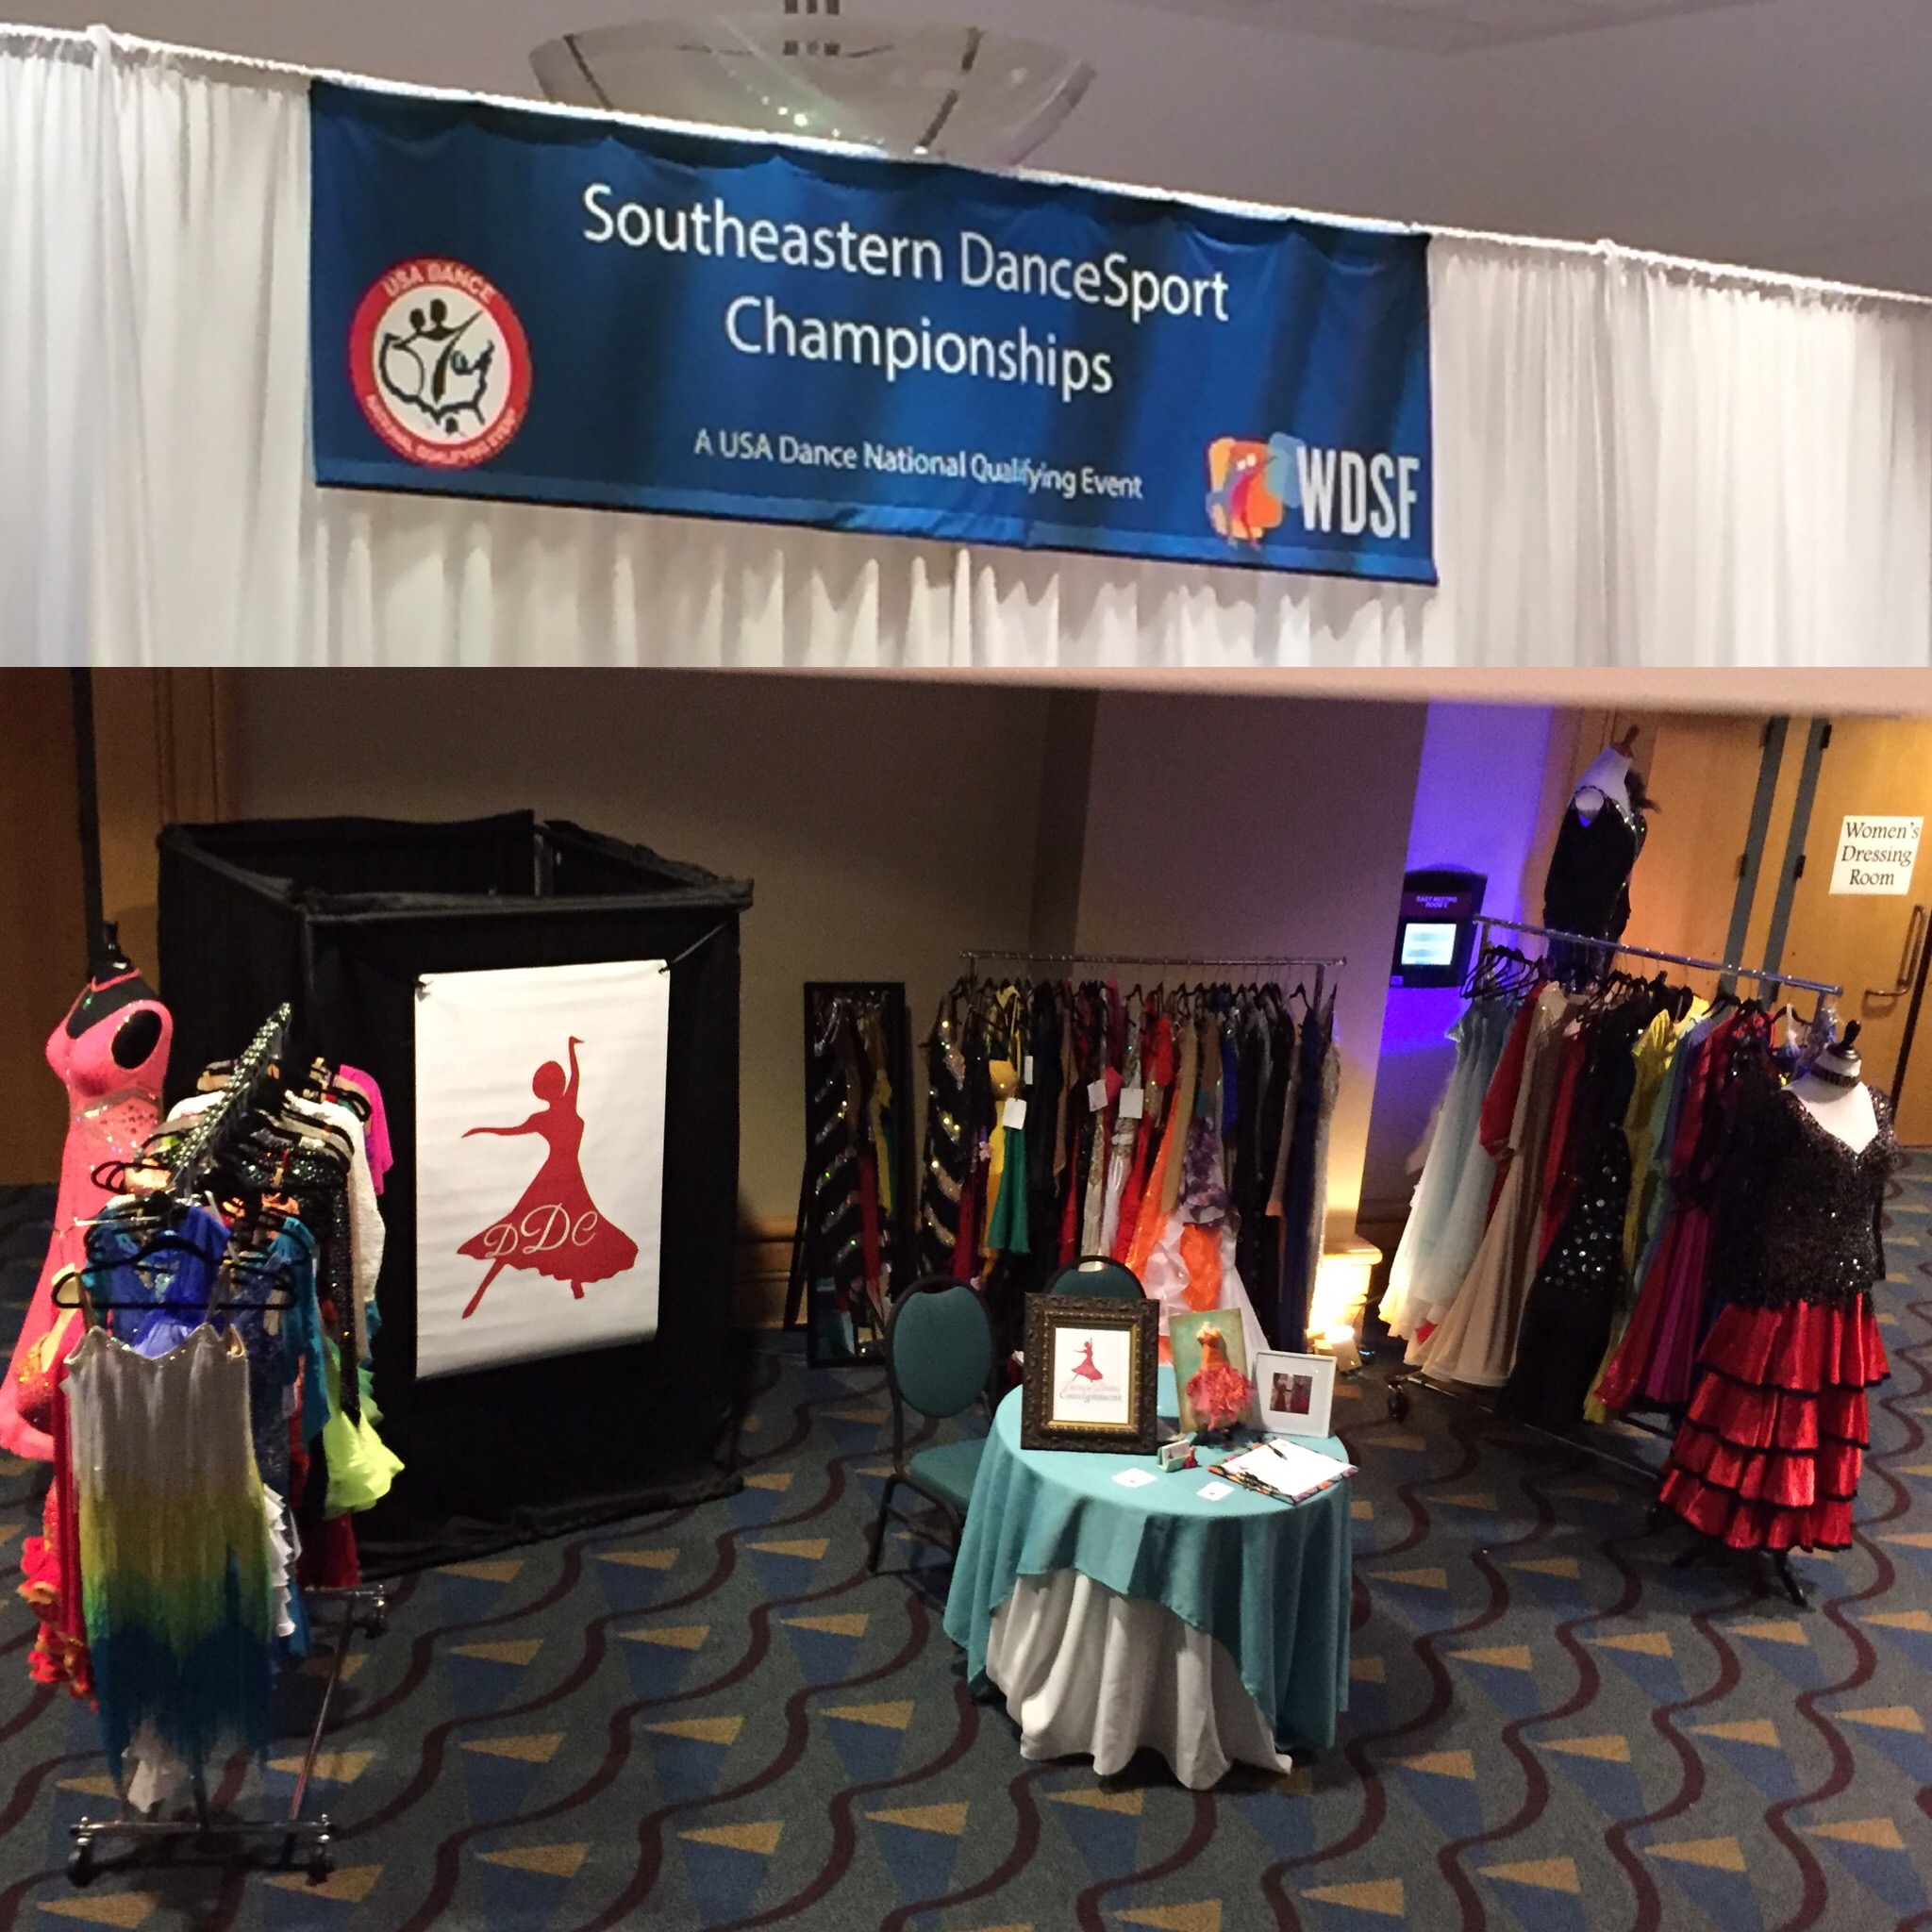 Southeastern DanceSport Championships